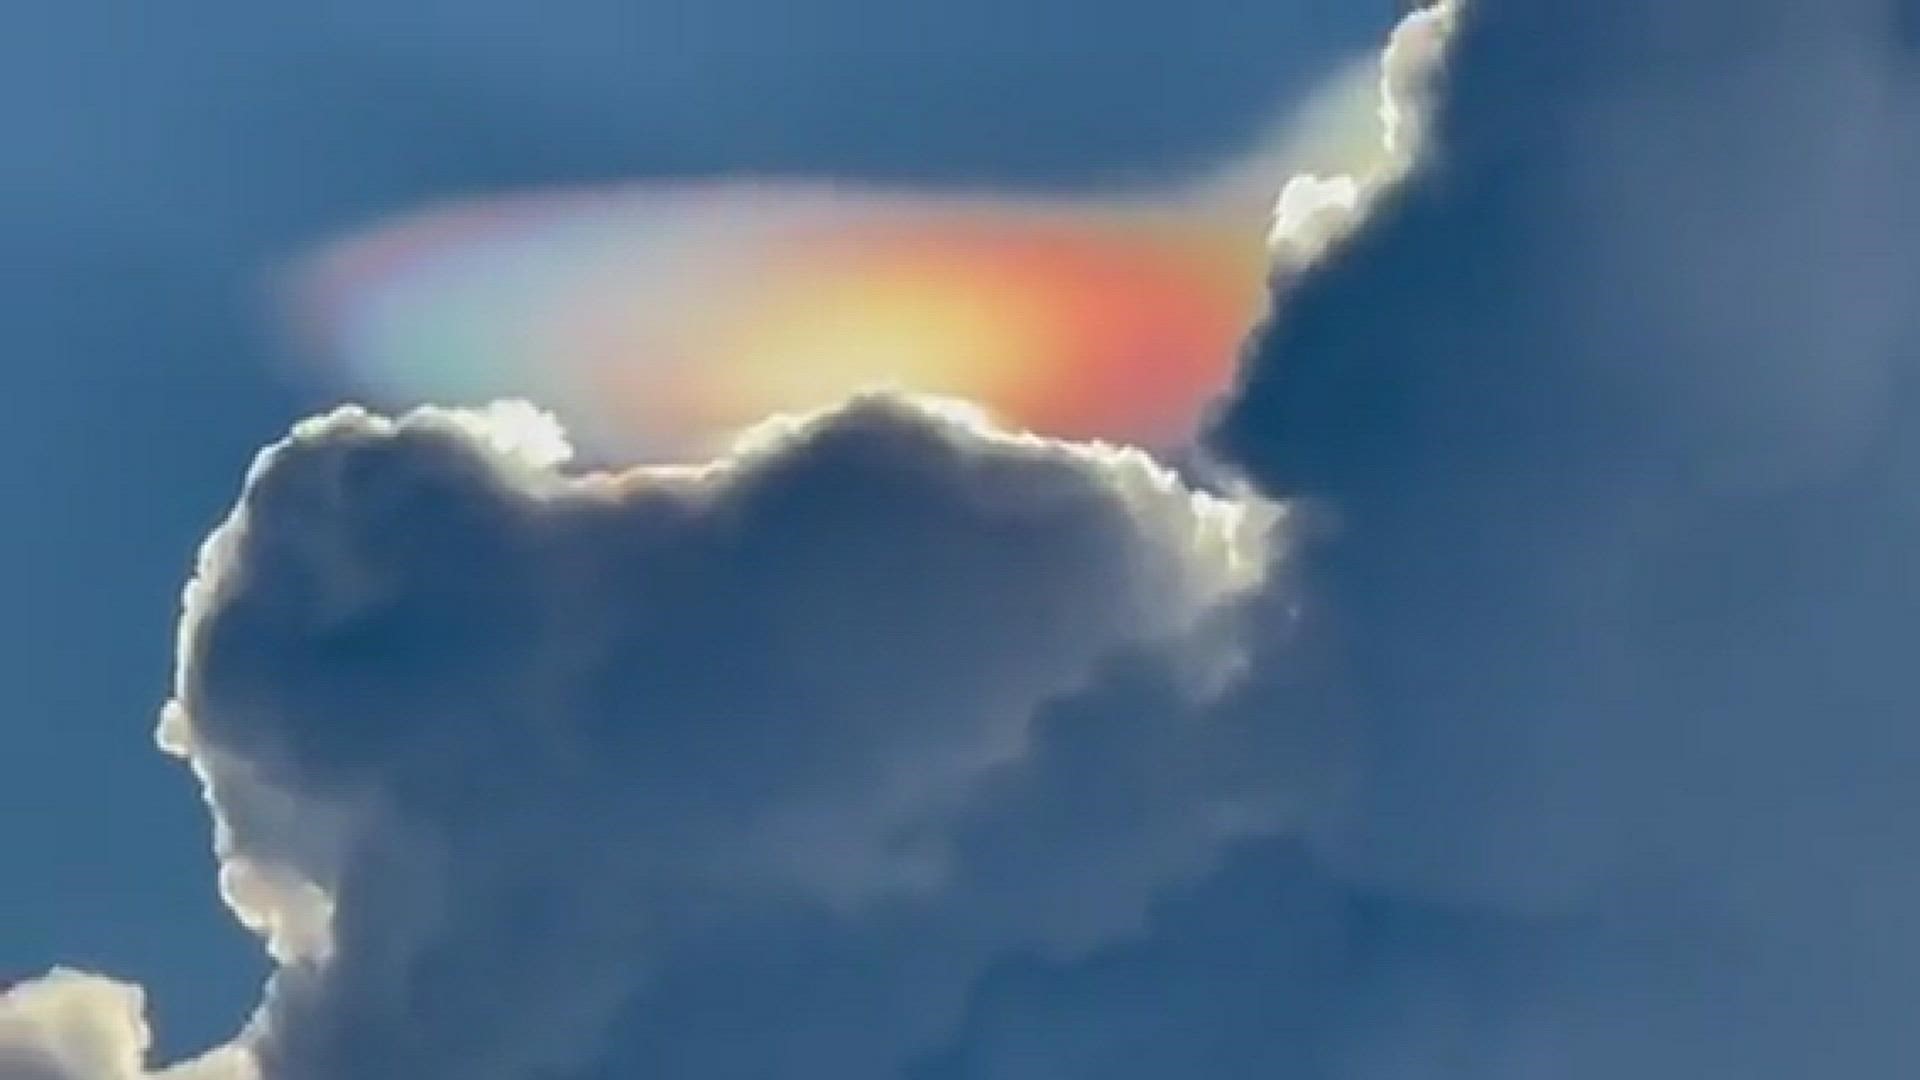 Tom captured a video of cloud iridescence in Hamilton, Virginia
Credit: Tom